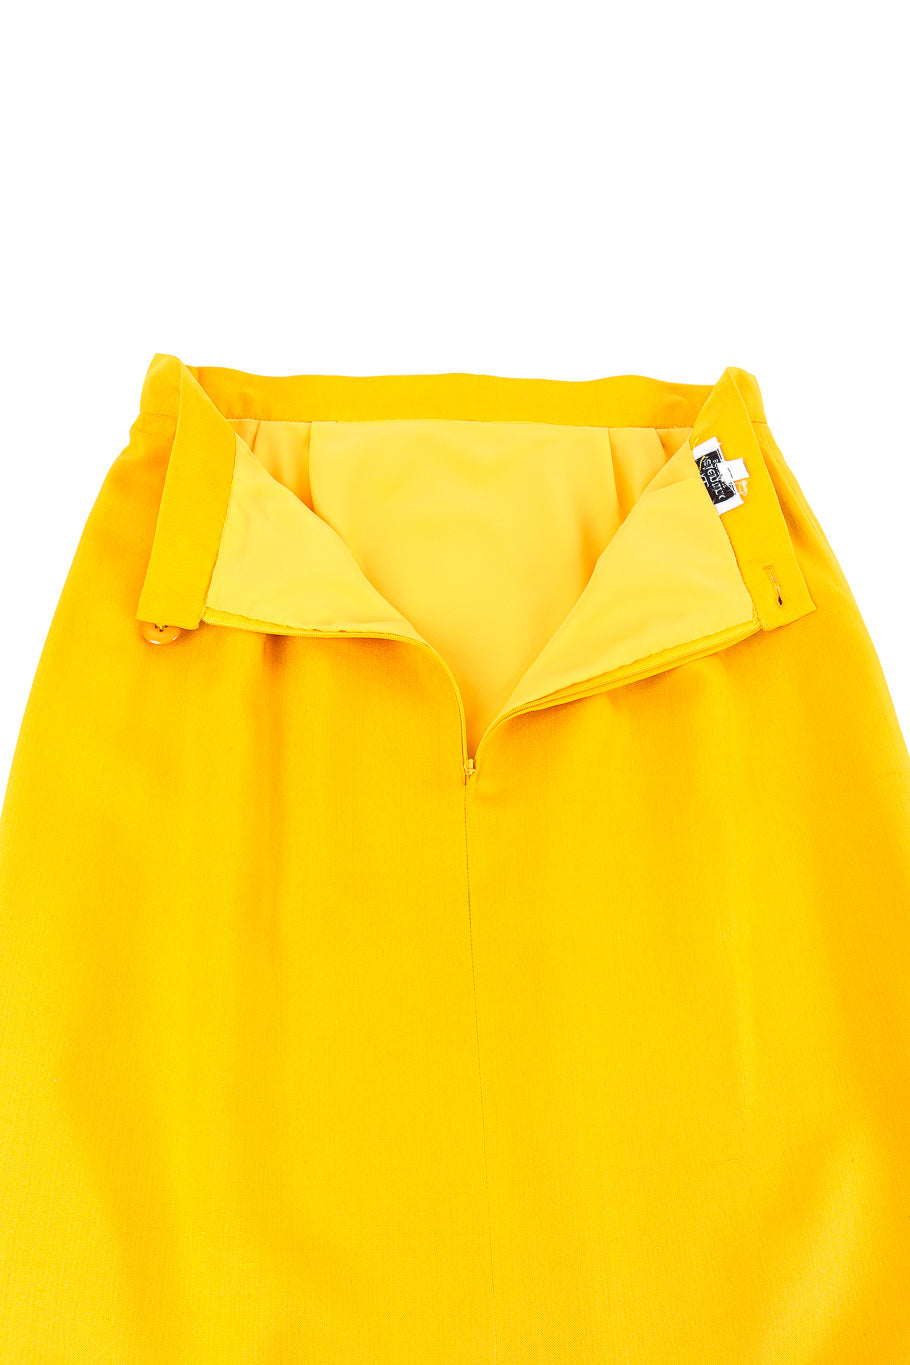 Valentino Boutique shell pattern jacket and skirt set skirt closure details @recessla